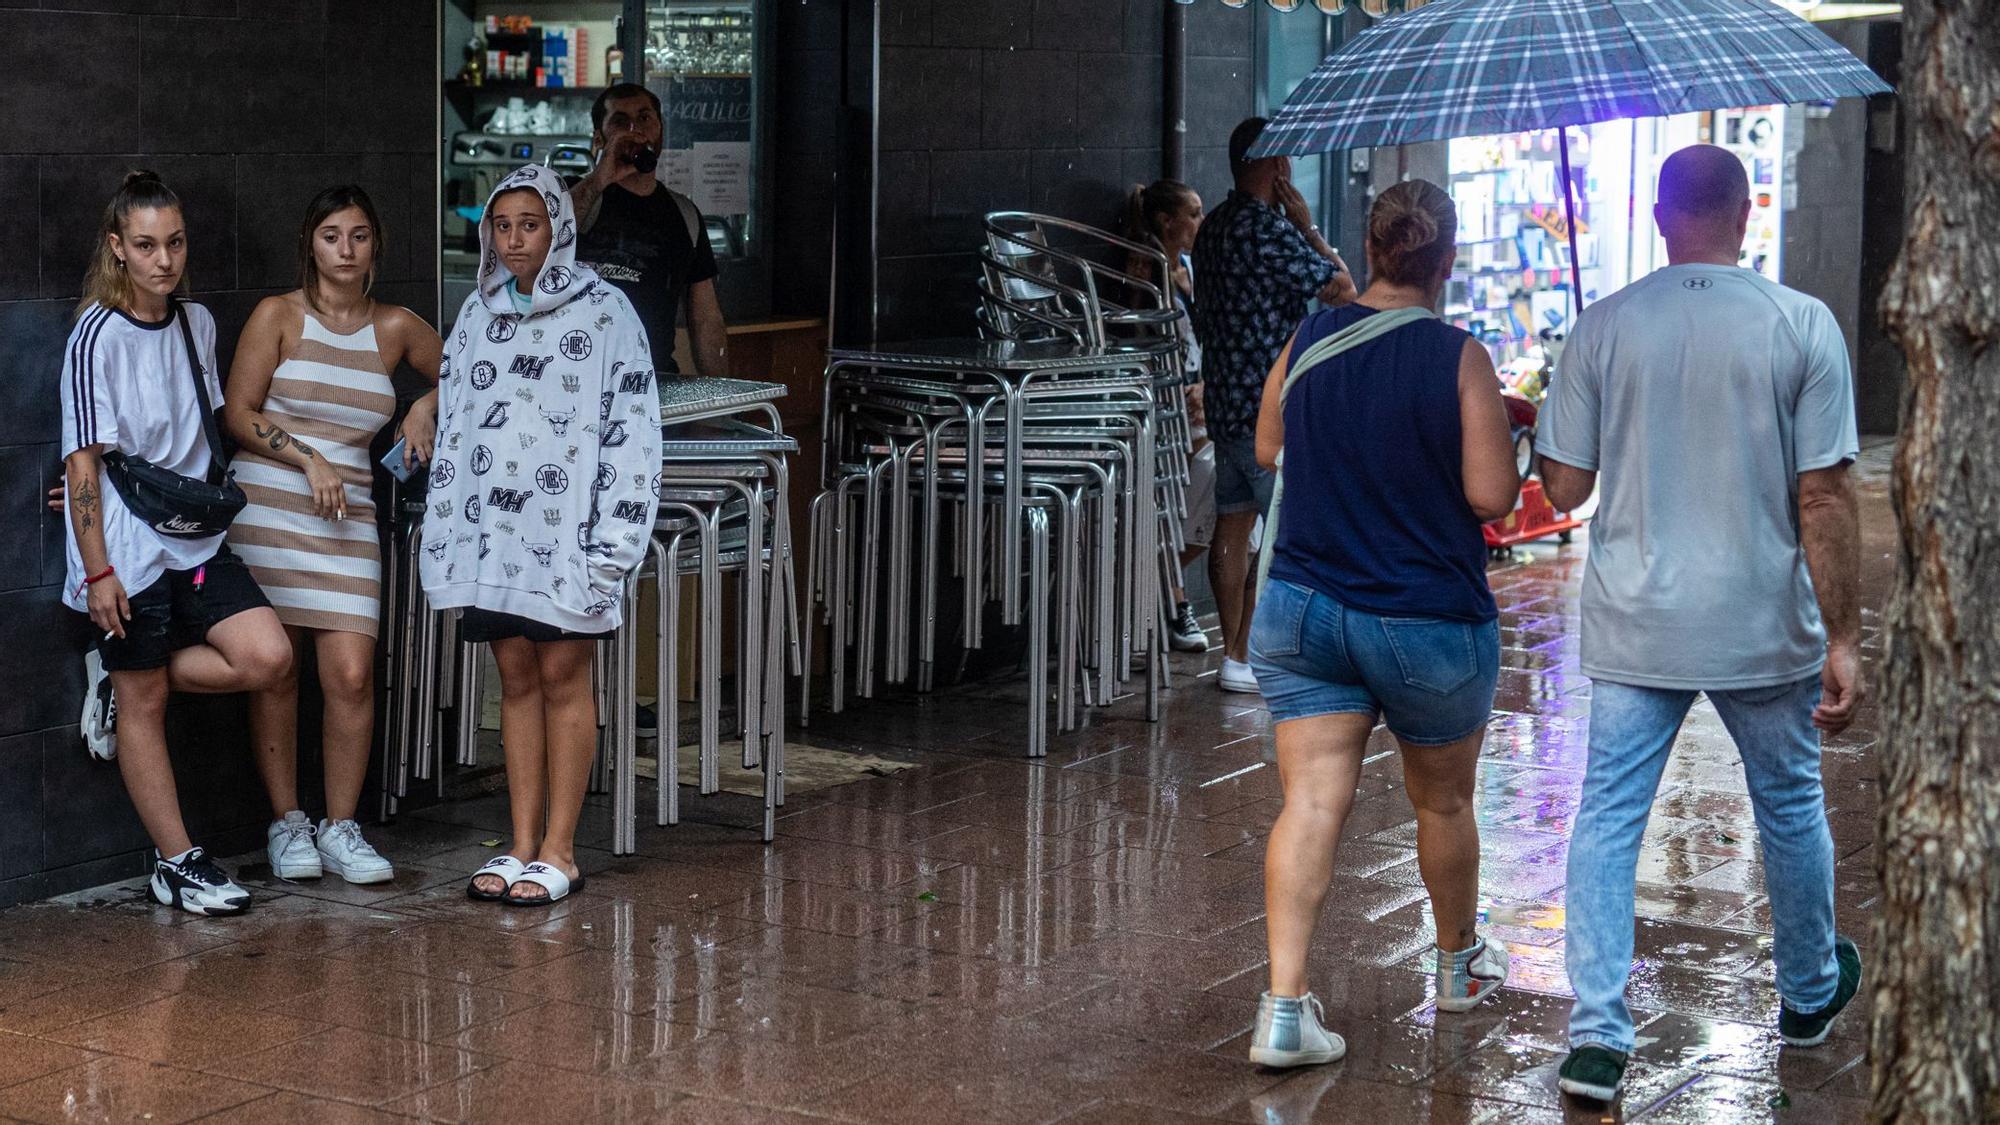 Tempesta lluvia tormenta a Santa Coloma FOTO de ZOWY VOETEN